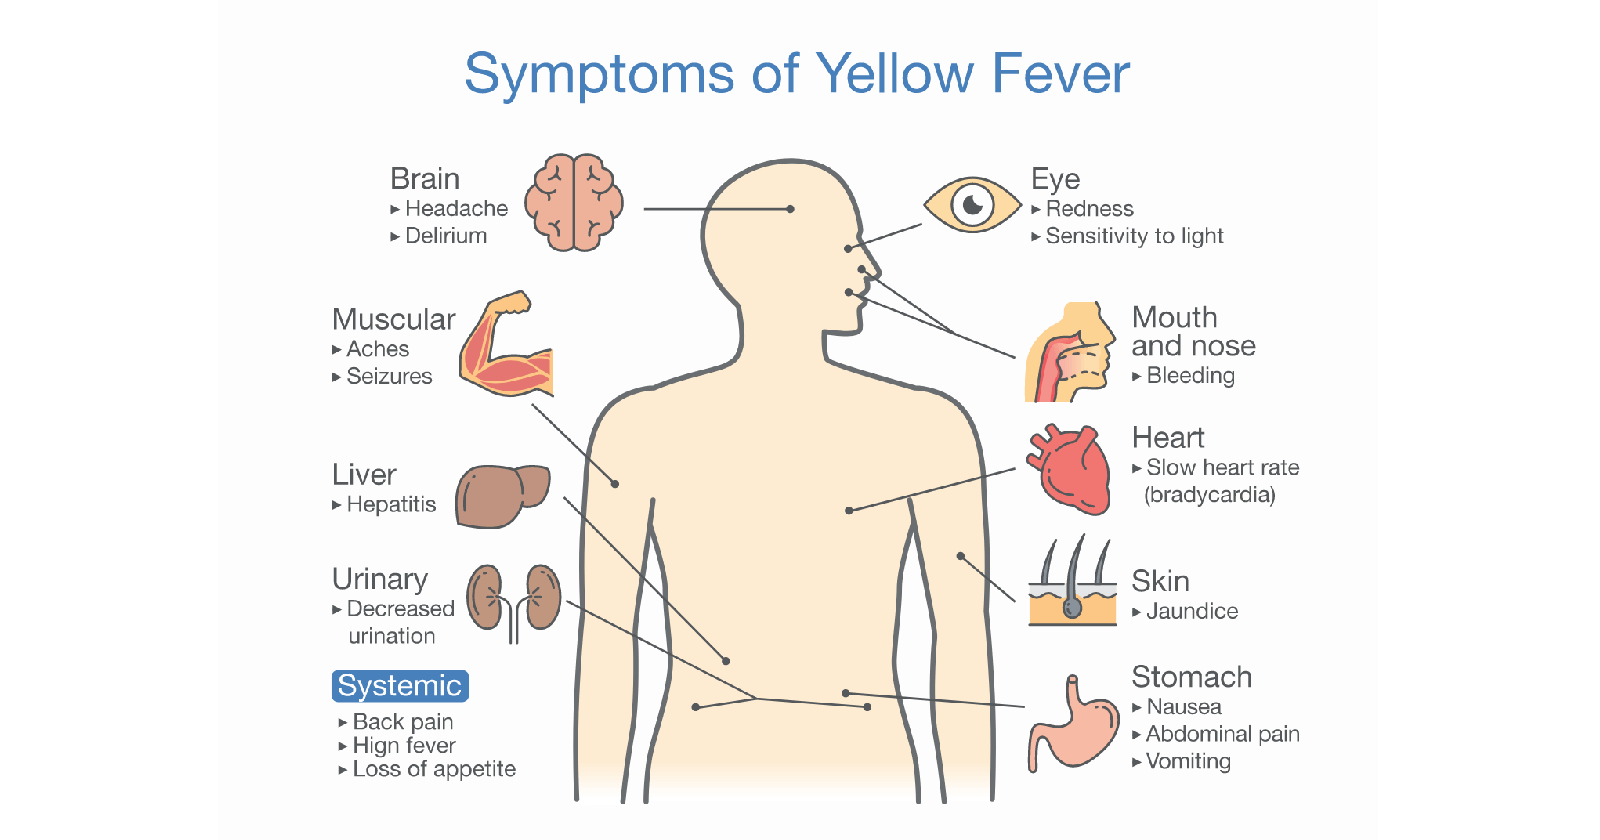 Symptoms of Yellow Fever